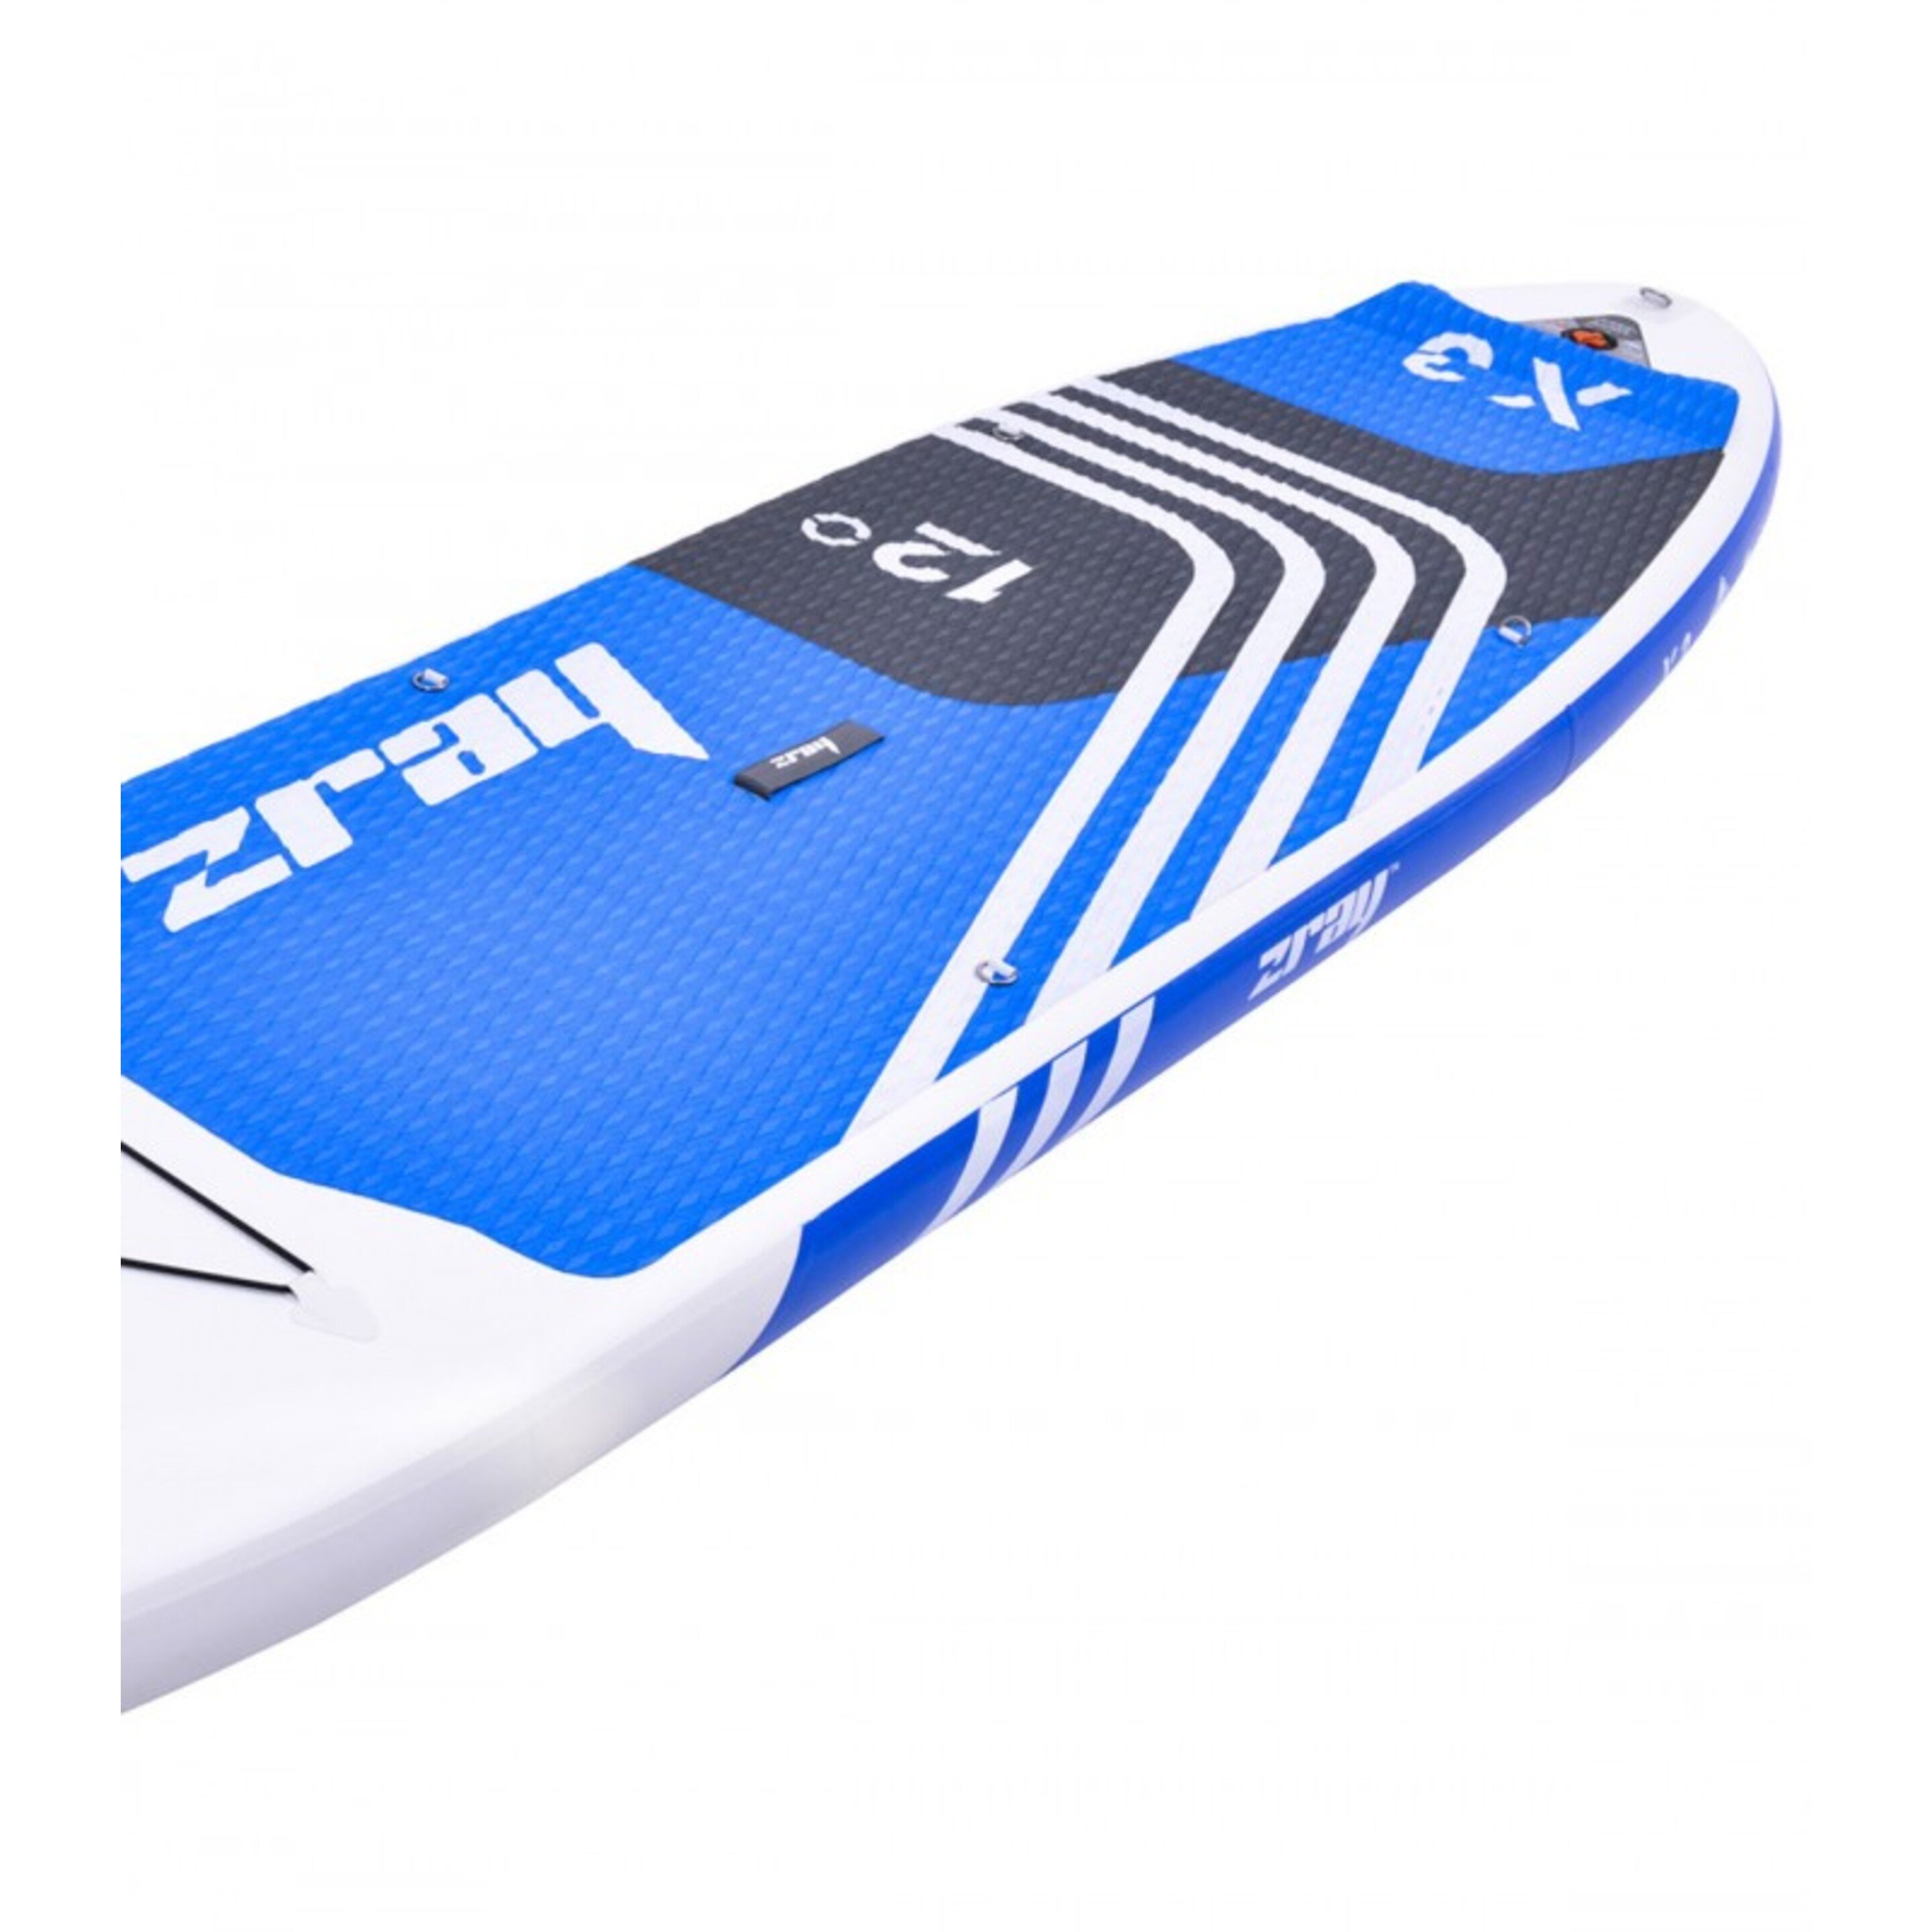 Tabla Paddle Surf Hinchable Zray X-rider X3 12,0